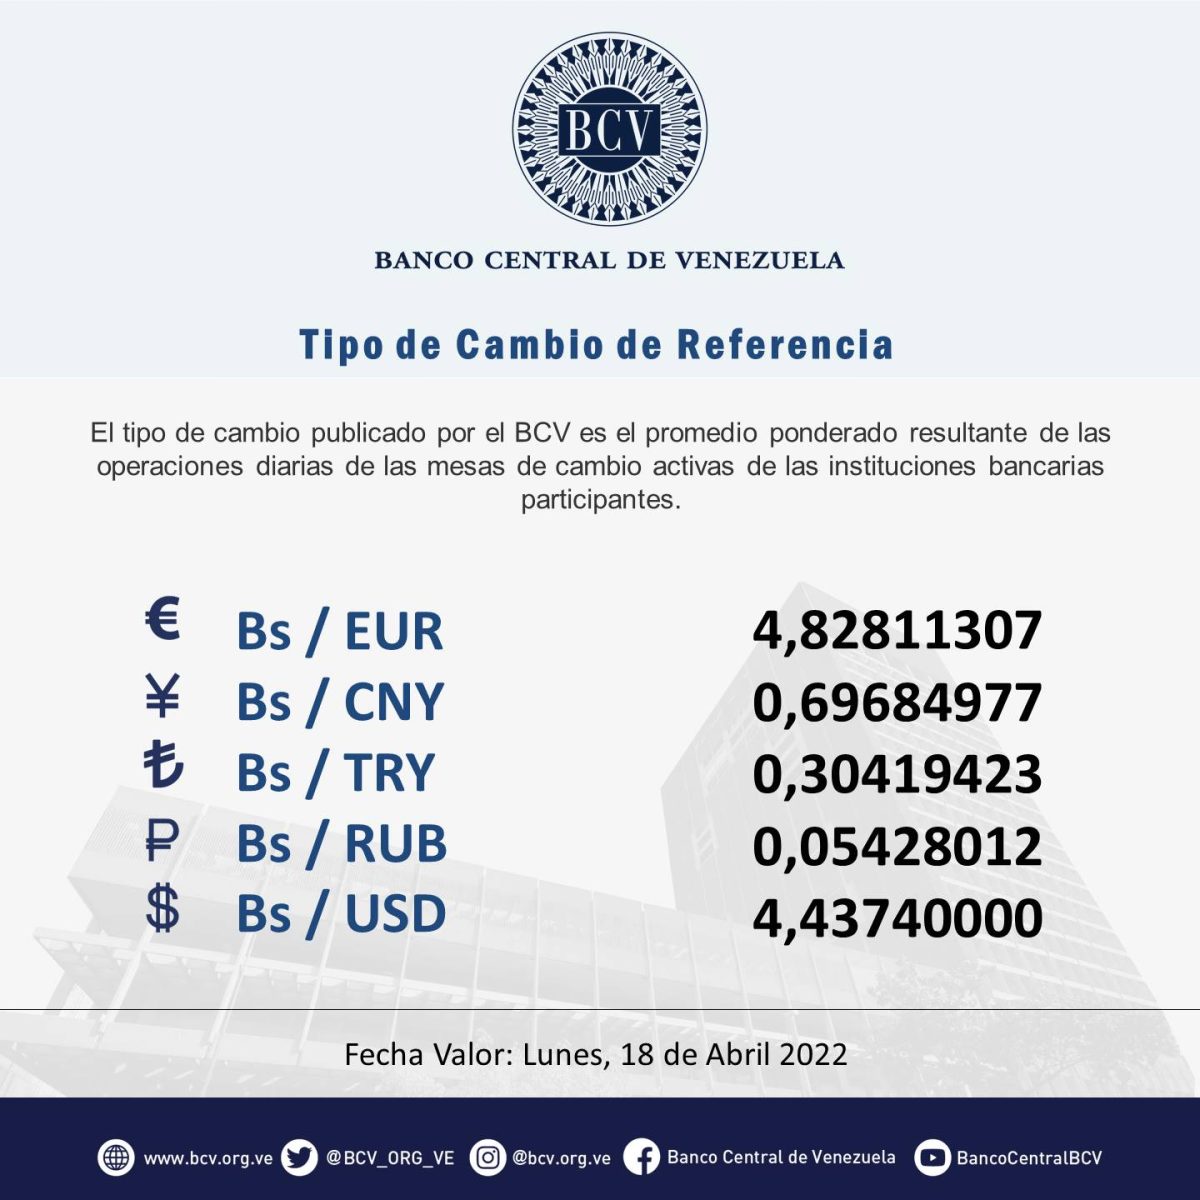 dolartoday en venezuela precio del dolar lunes 18 de abril de 2022 laverdaddemonagas.com ccfd9105 c64d 4fe9 a6f0 4e52a2a1db2d